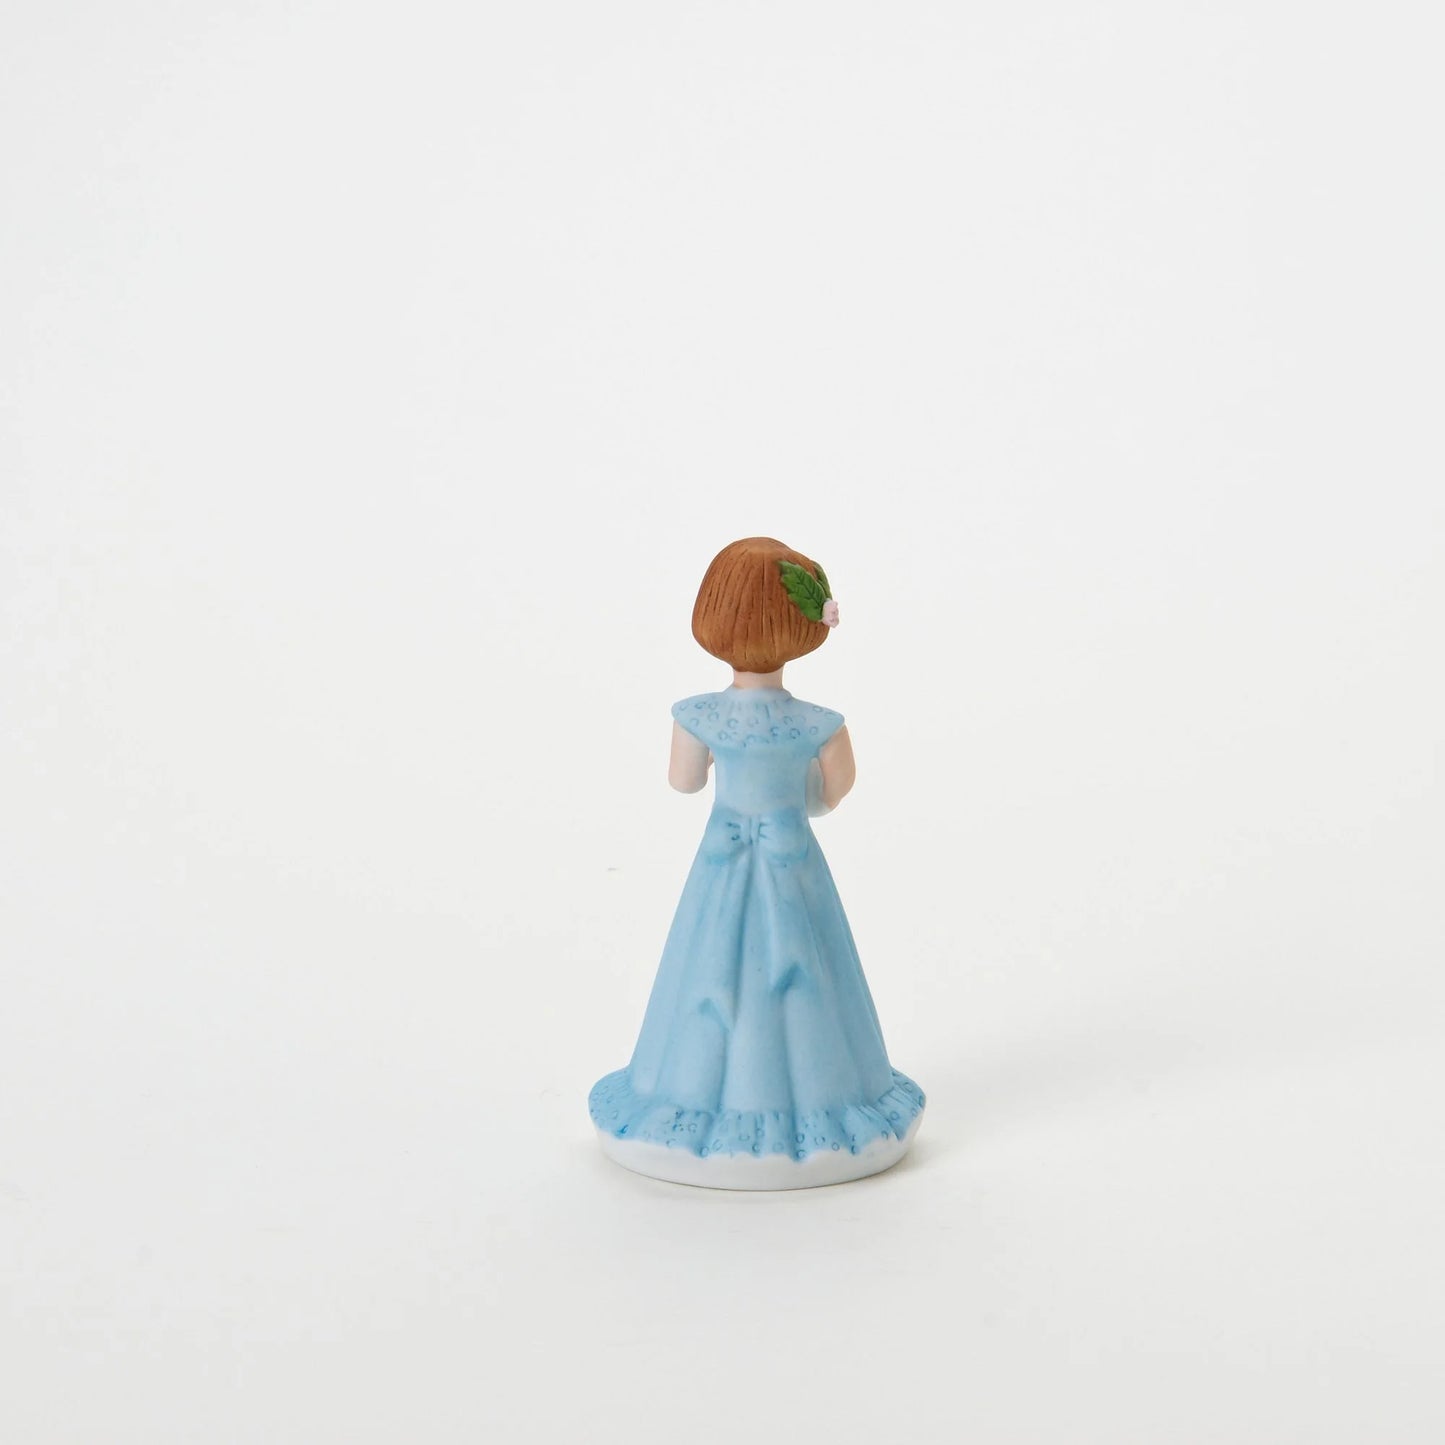 age 6 figurine back